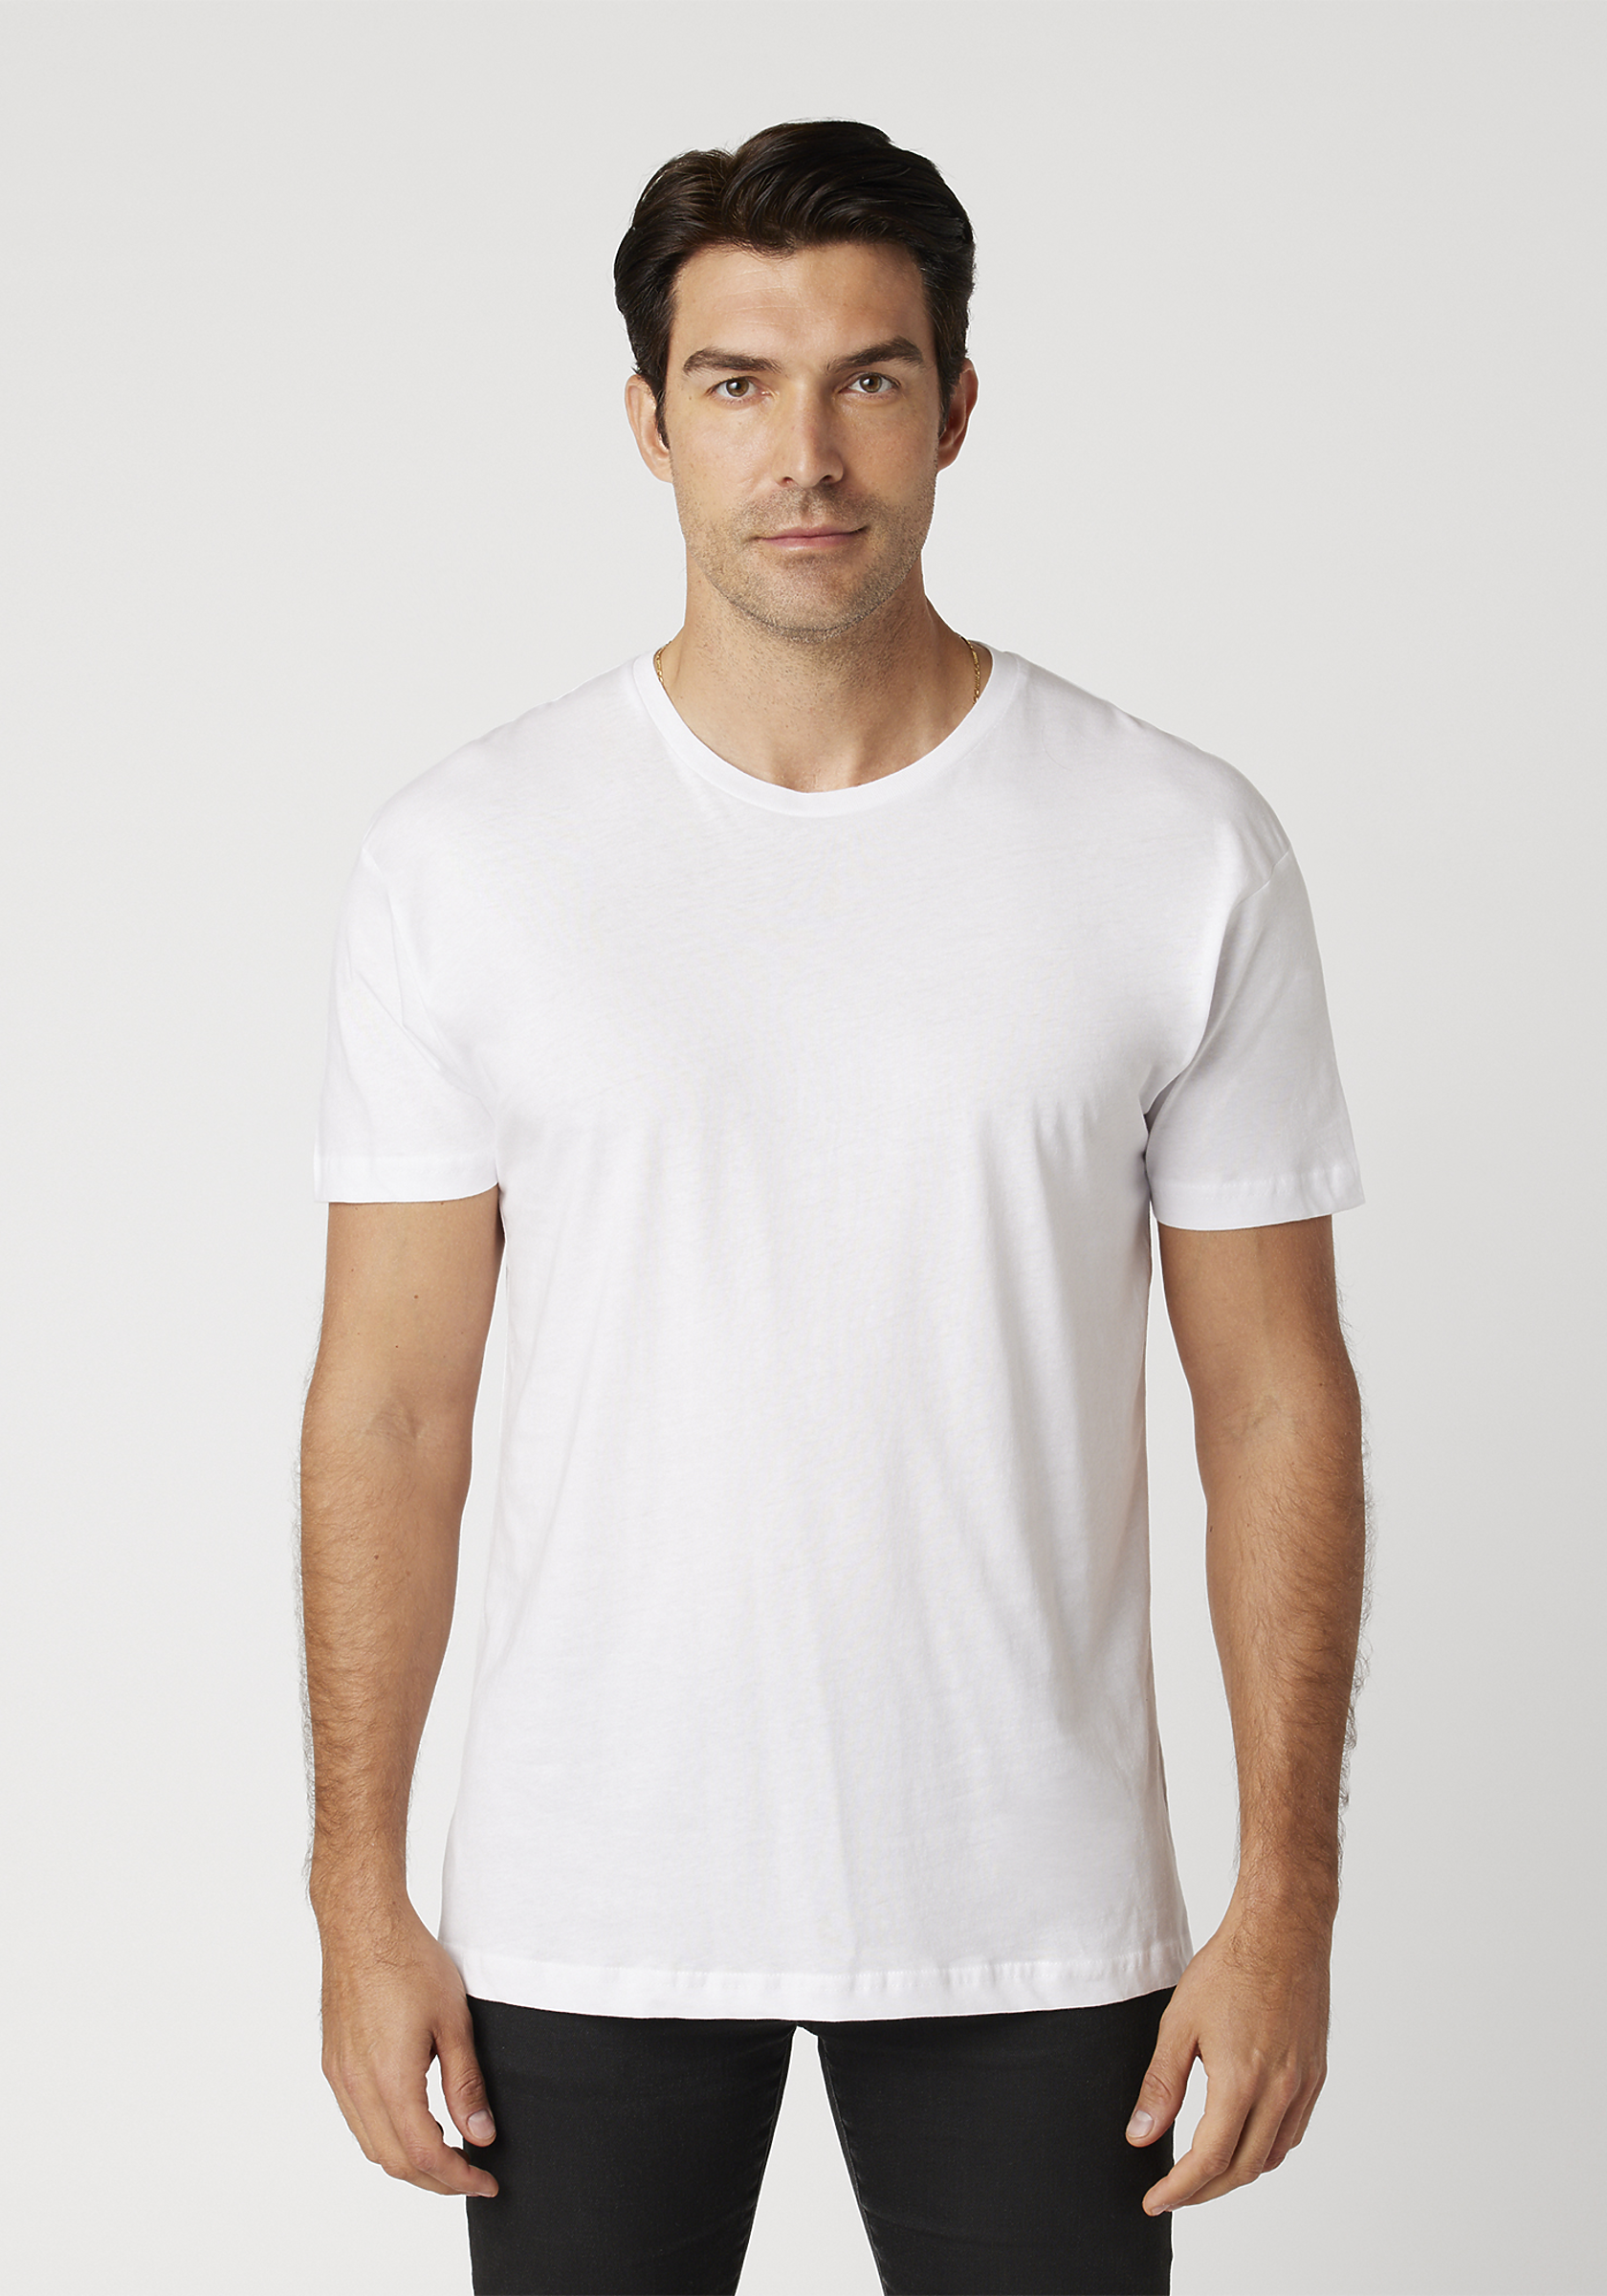 Buy Best Cotton T-Shirts for Men & Women Online